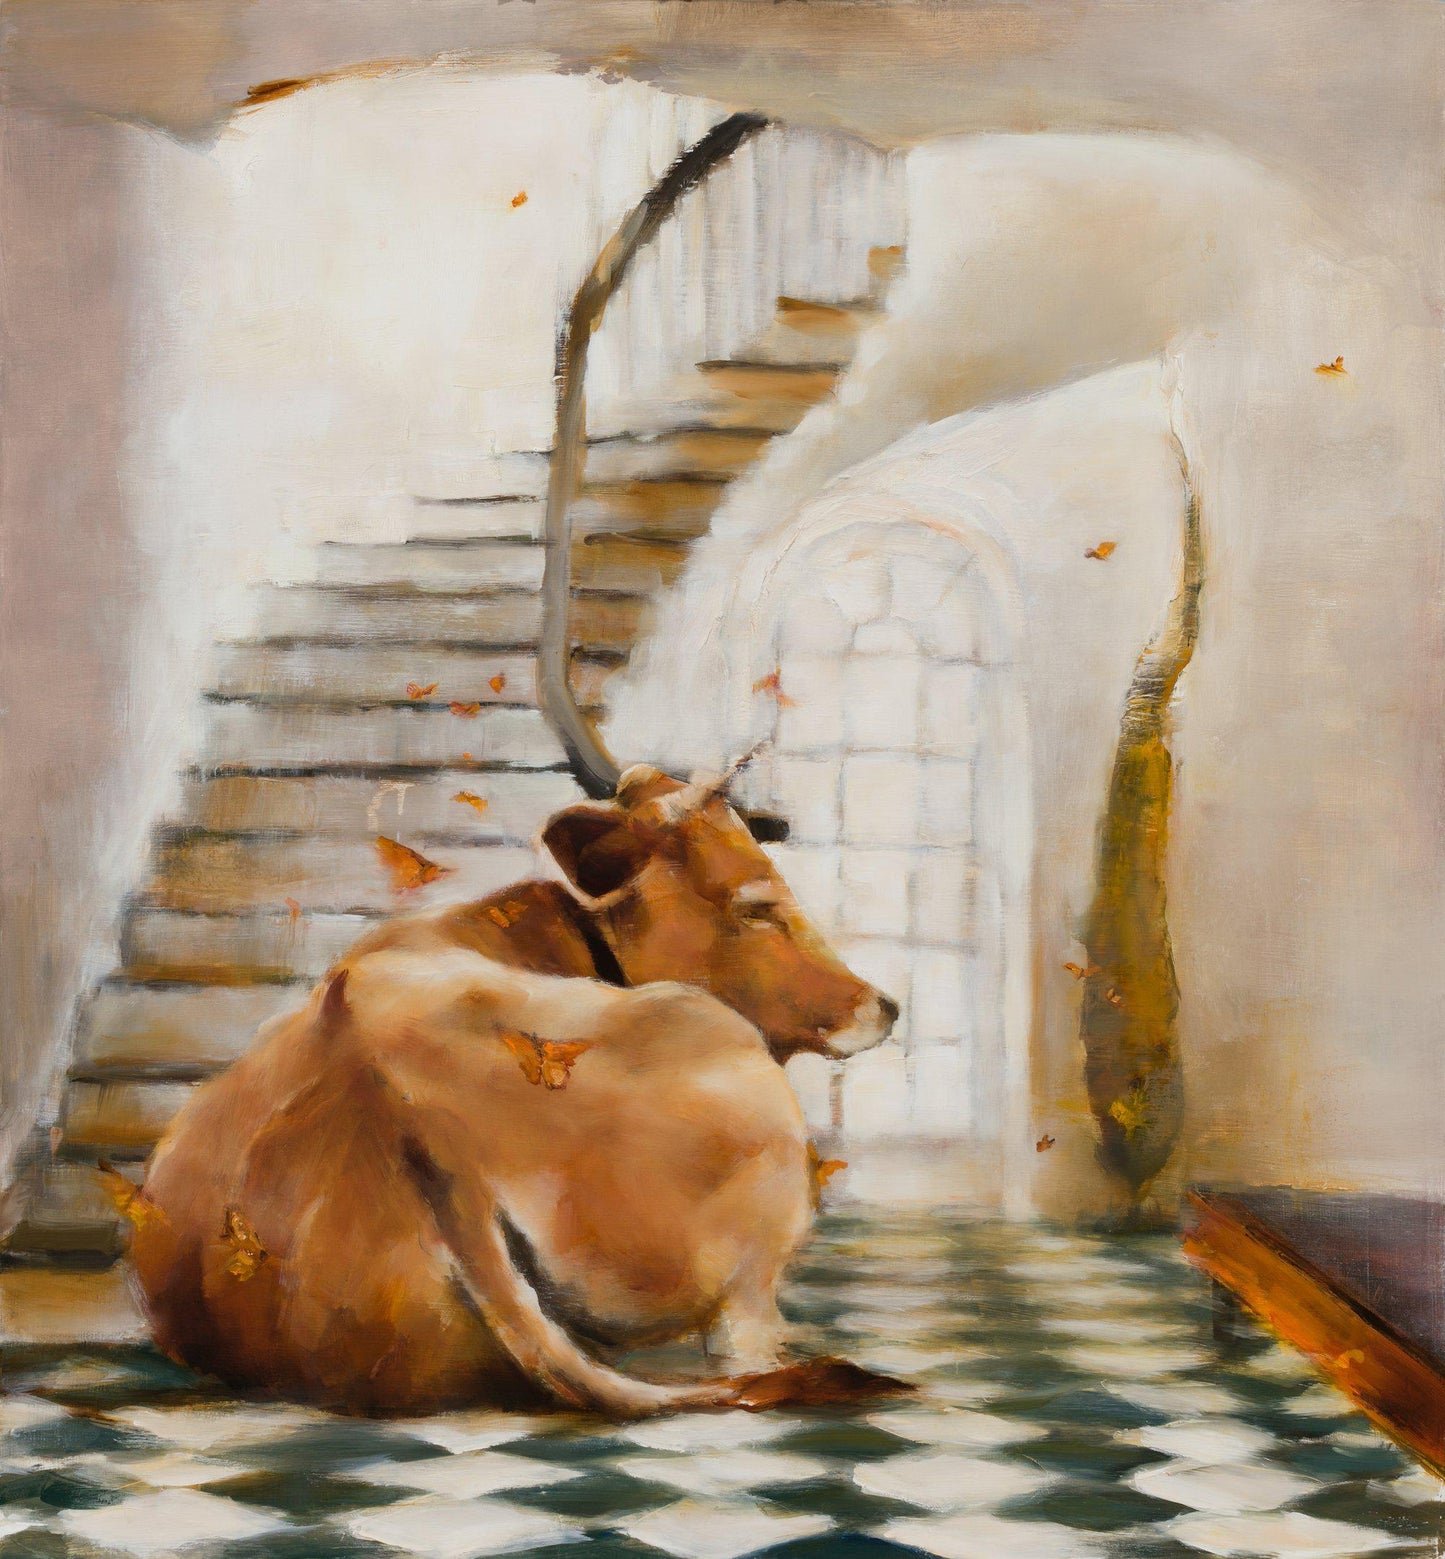 L'escalier-Painting-Elsa Sroka-Sorrel Sky Gallery